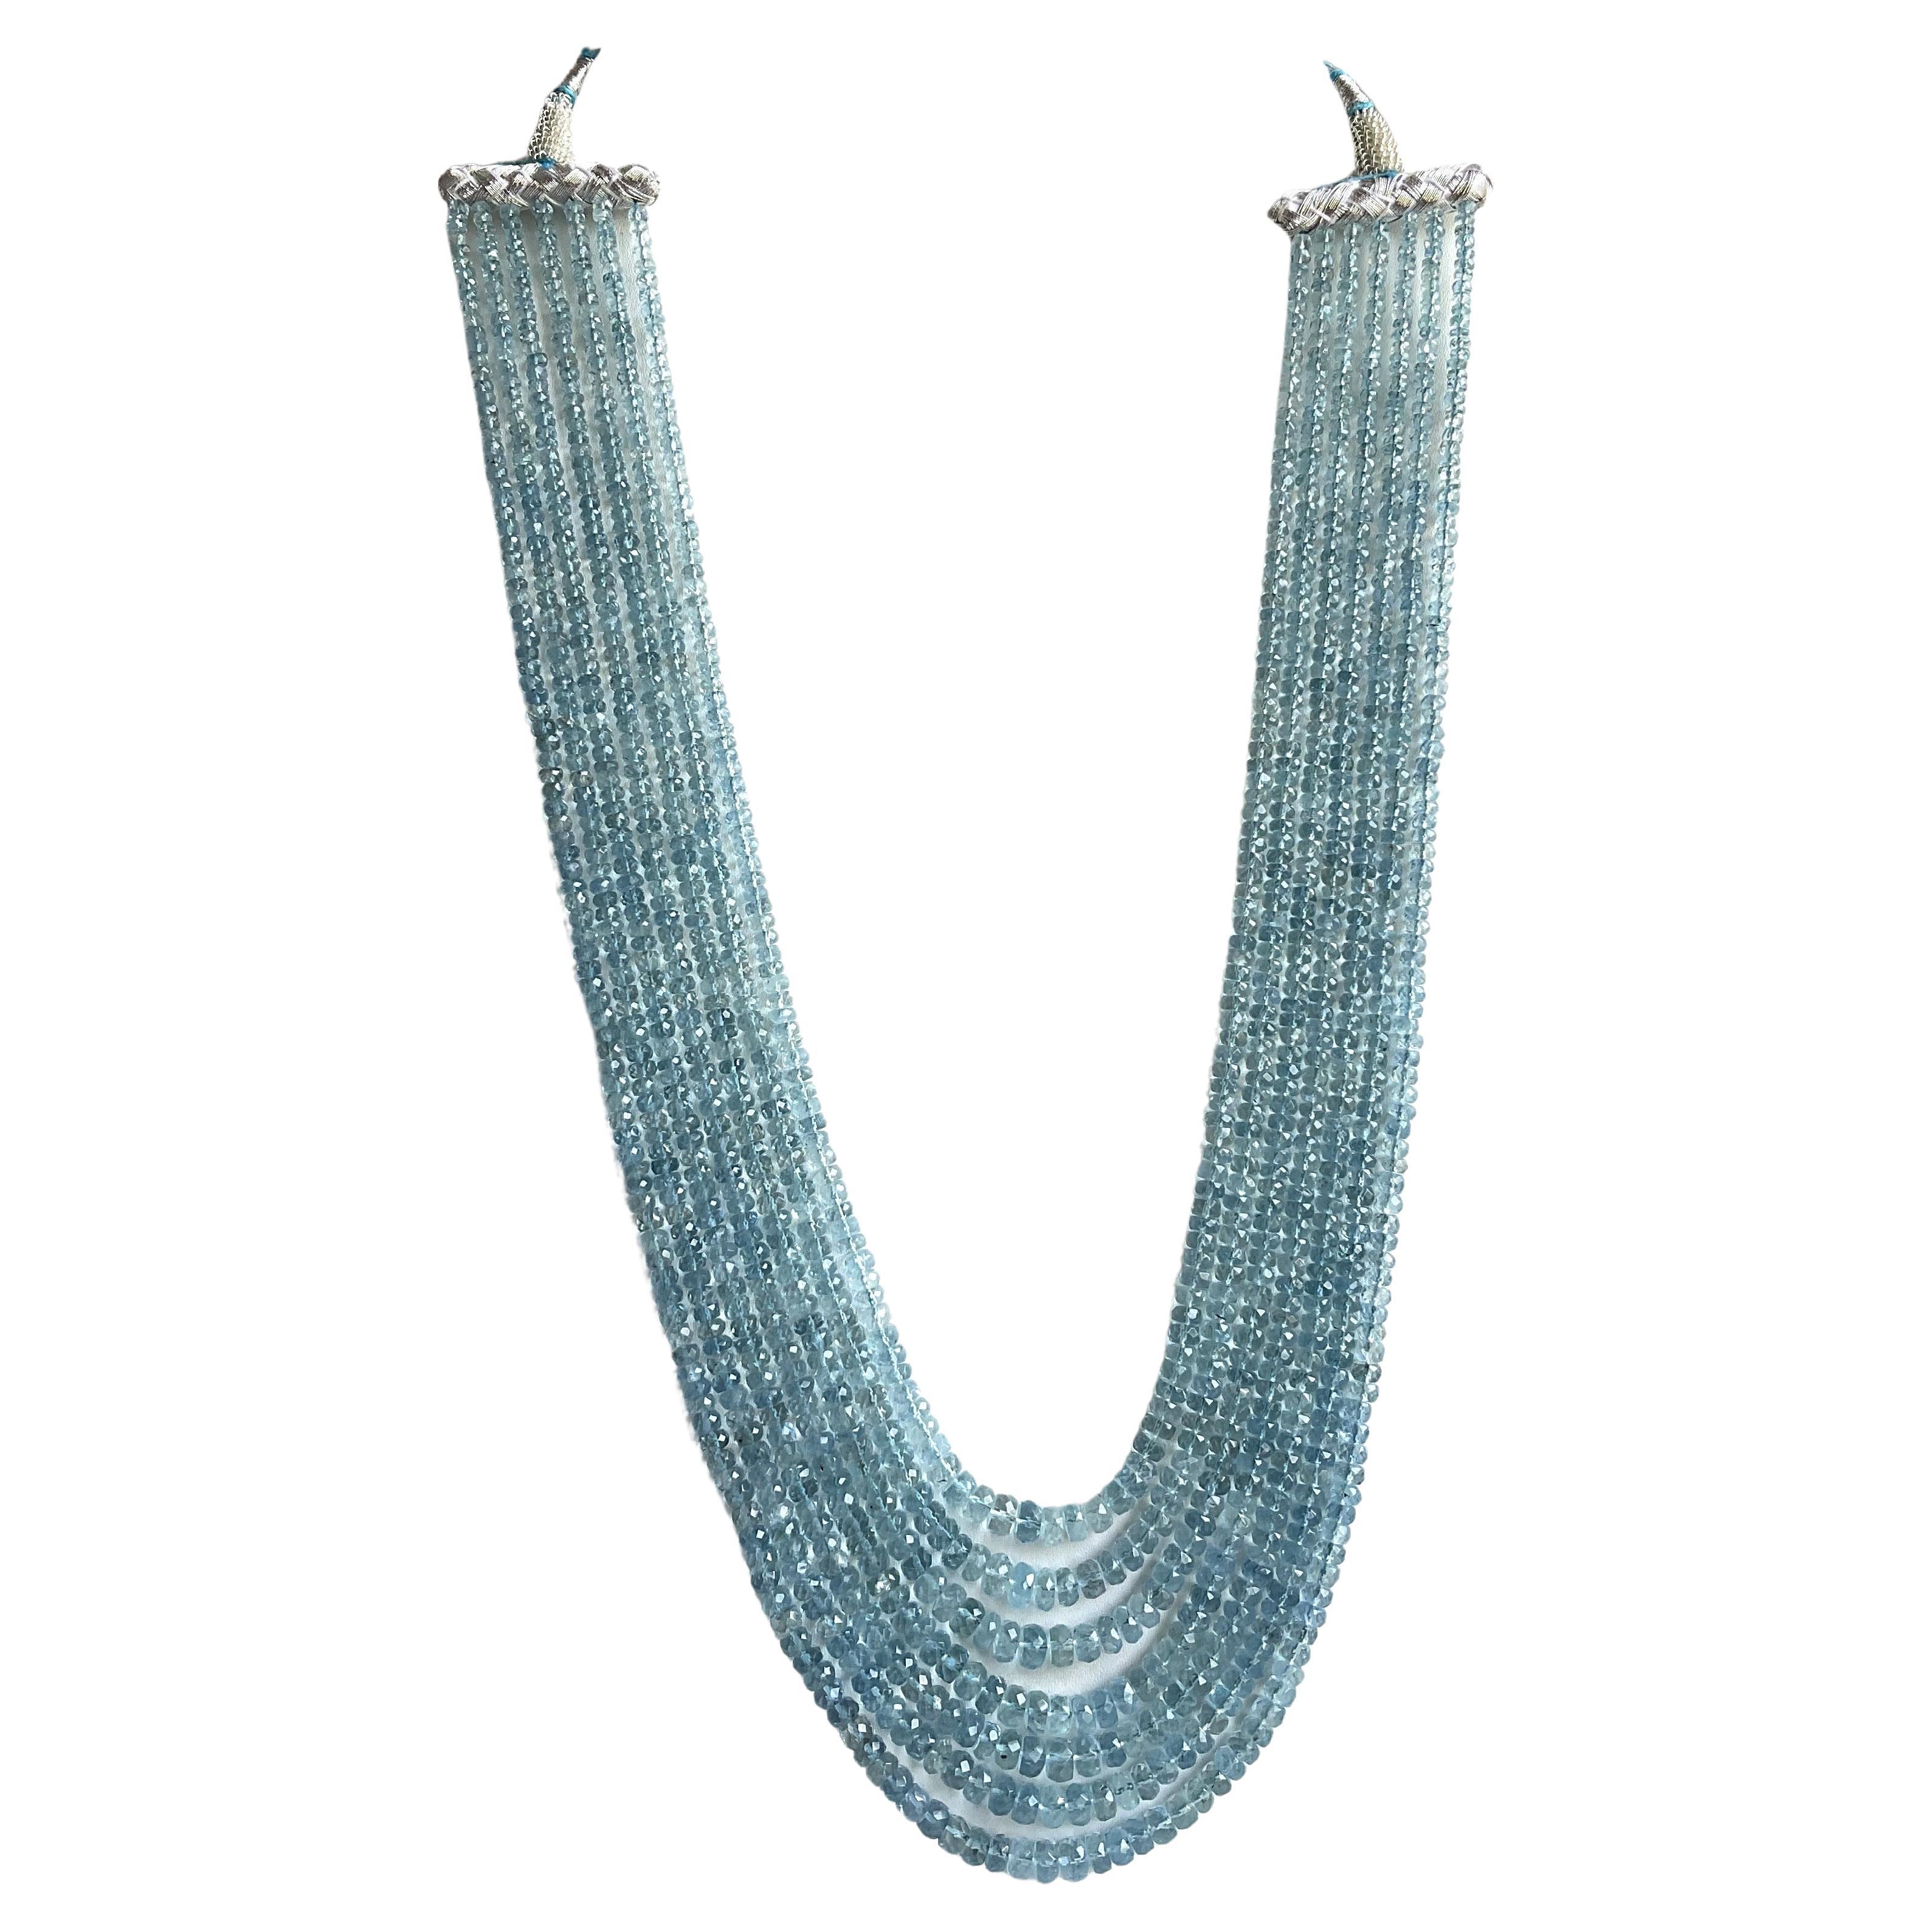 445,90 Karat Aquamarin Perlenkette 7 Strang Facettierte Perlen gute Qualität Edelstein